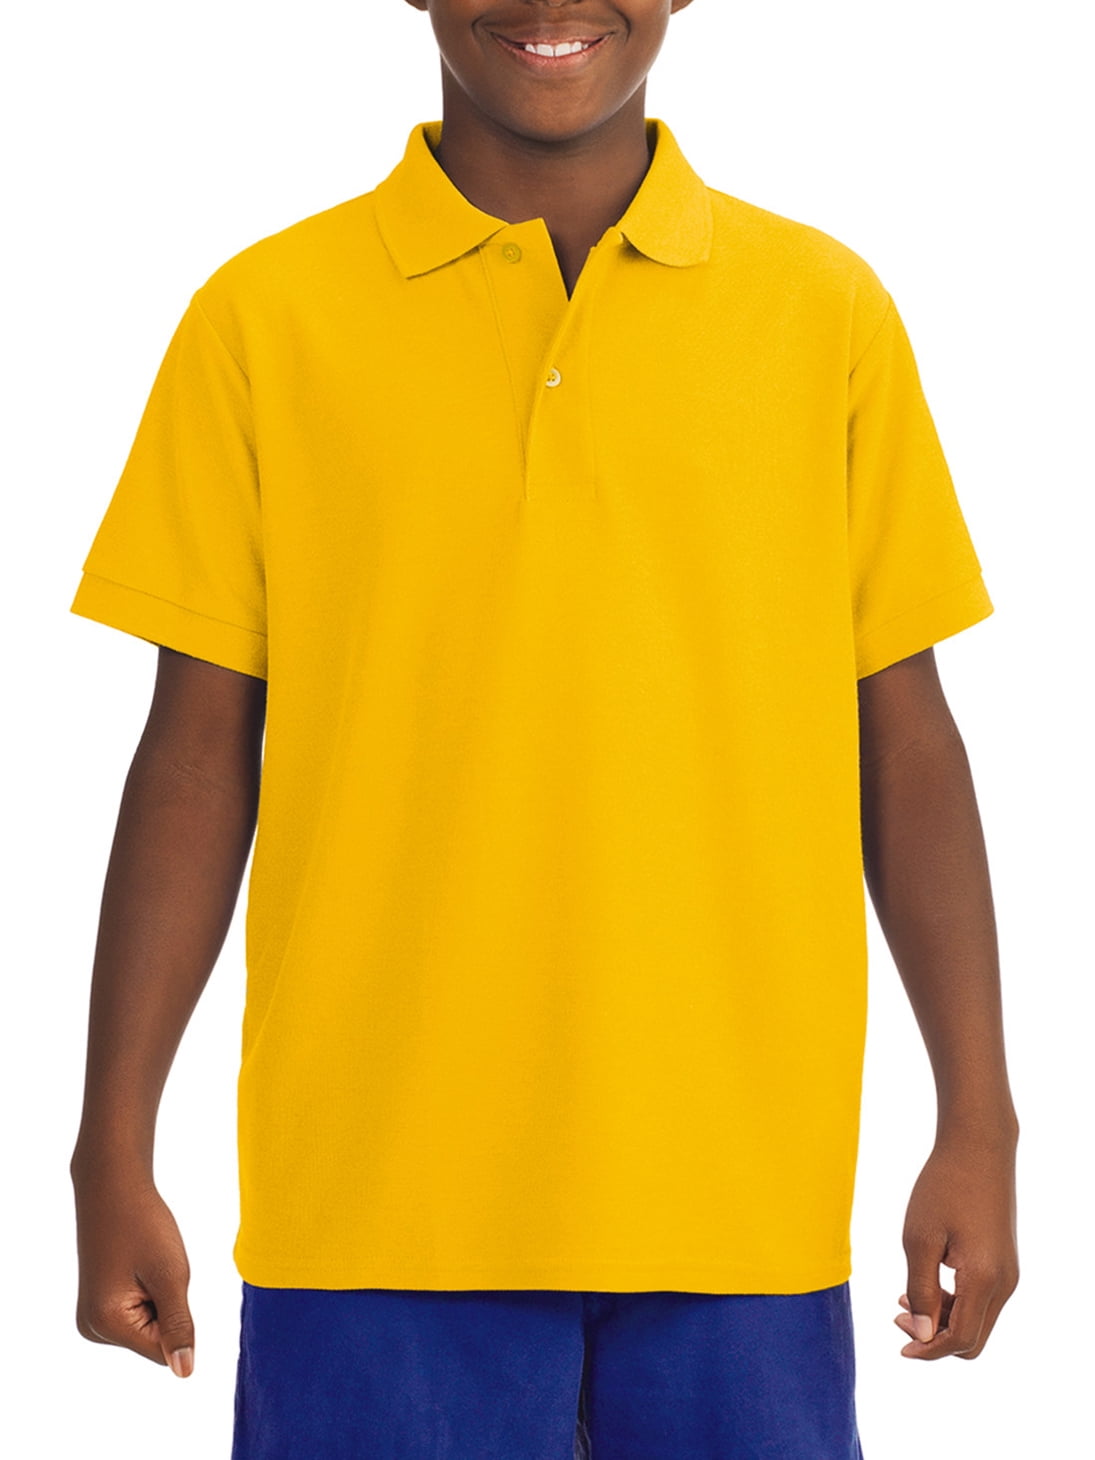 Jerzees Boys' School Uniform Wrinkle Resistant Performance Polo Shirt Size Large 